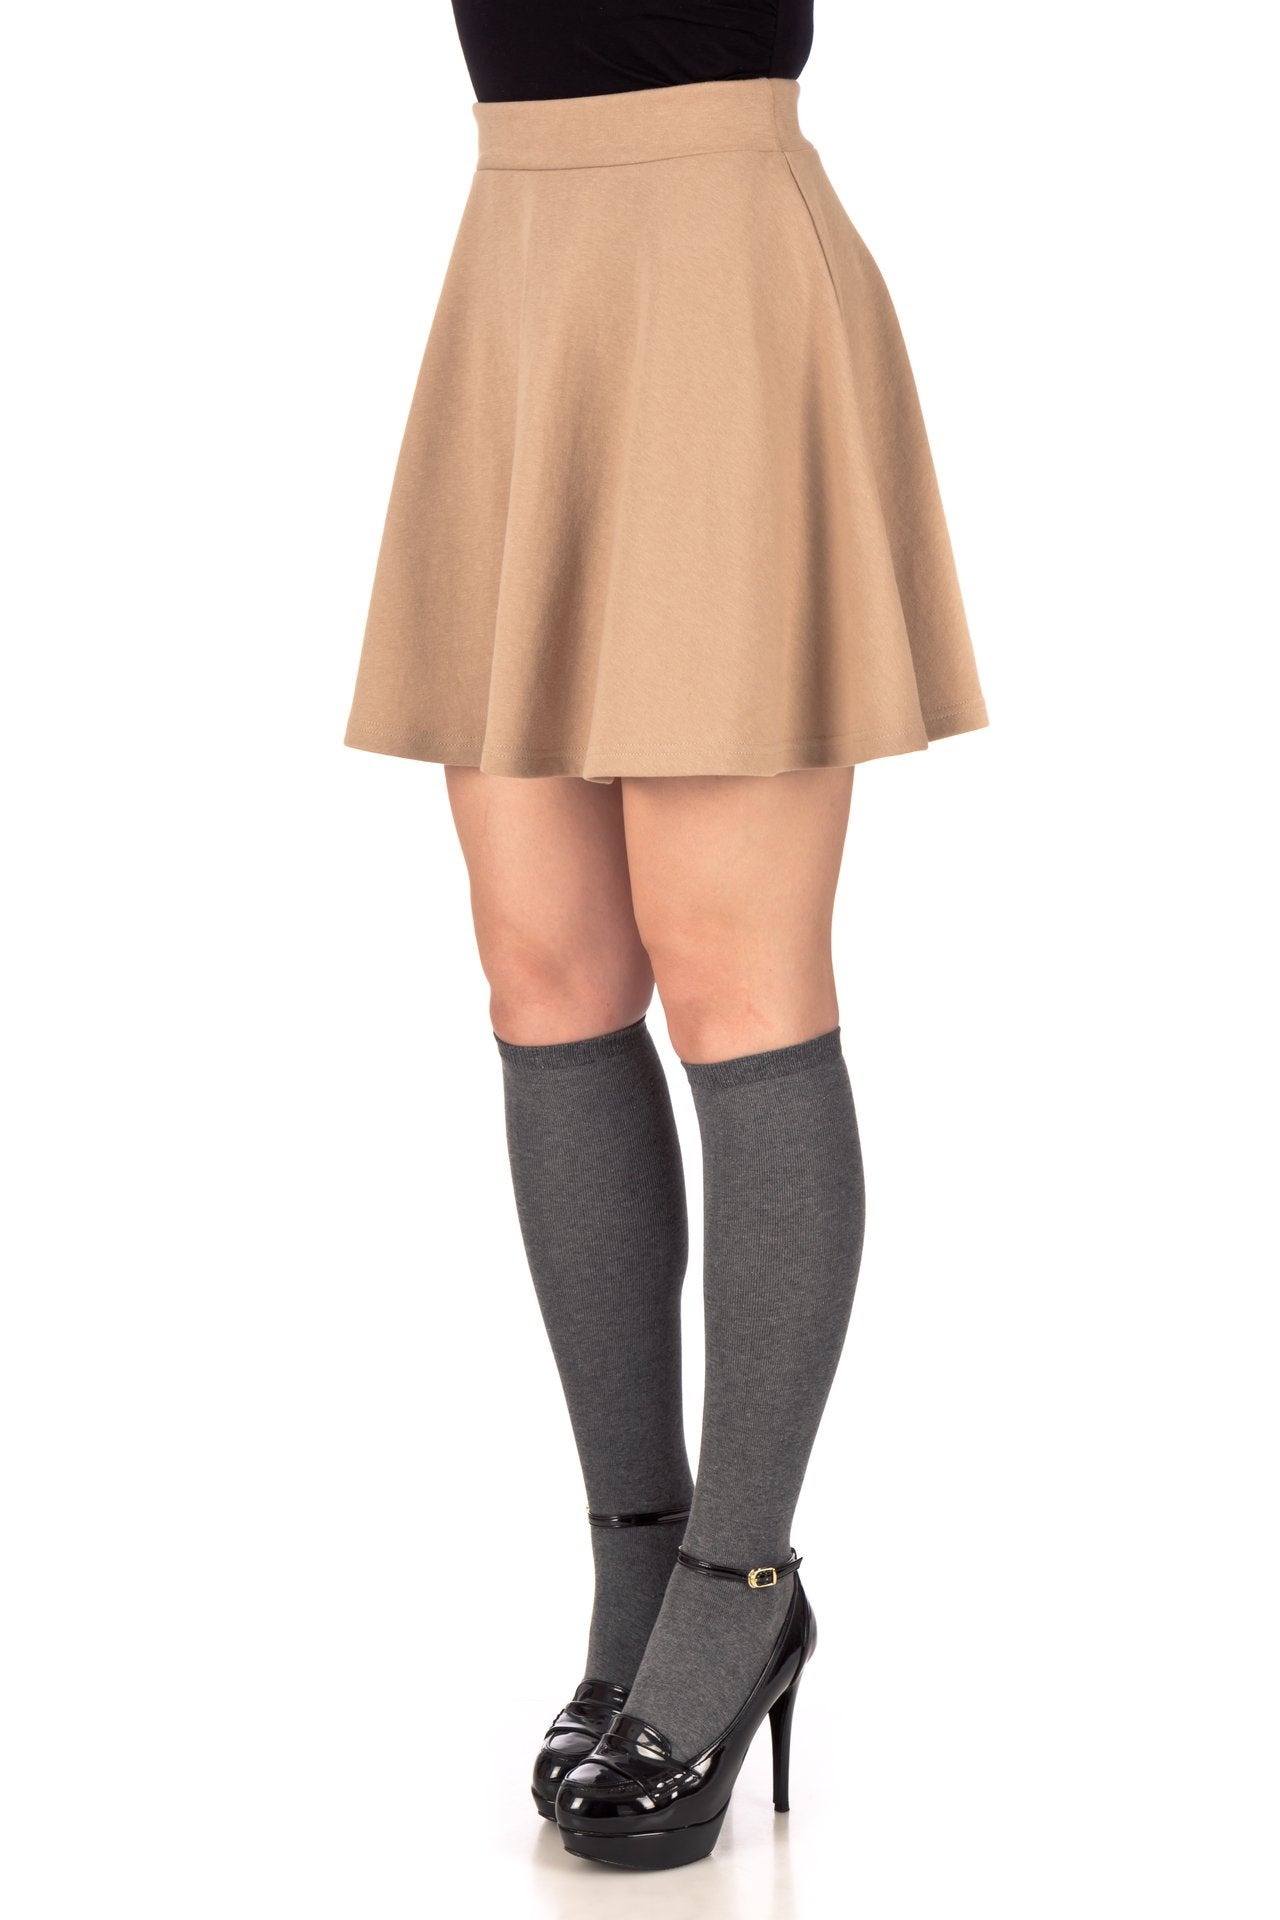 Basic Solid Stretchy Cotton High Waist A-line Flared Skater Mini Skirt_Beige